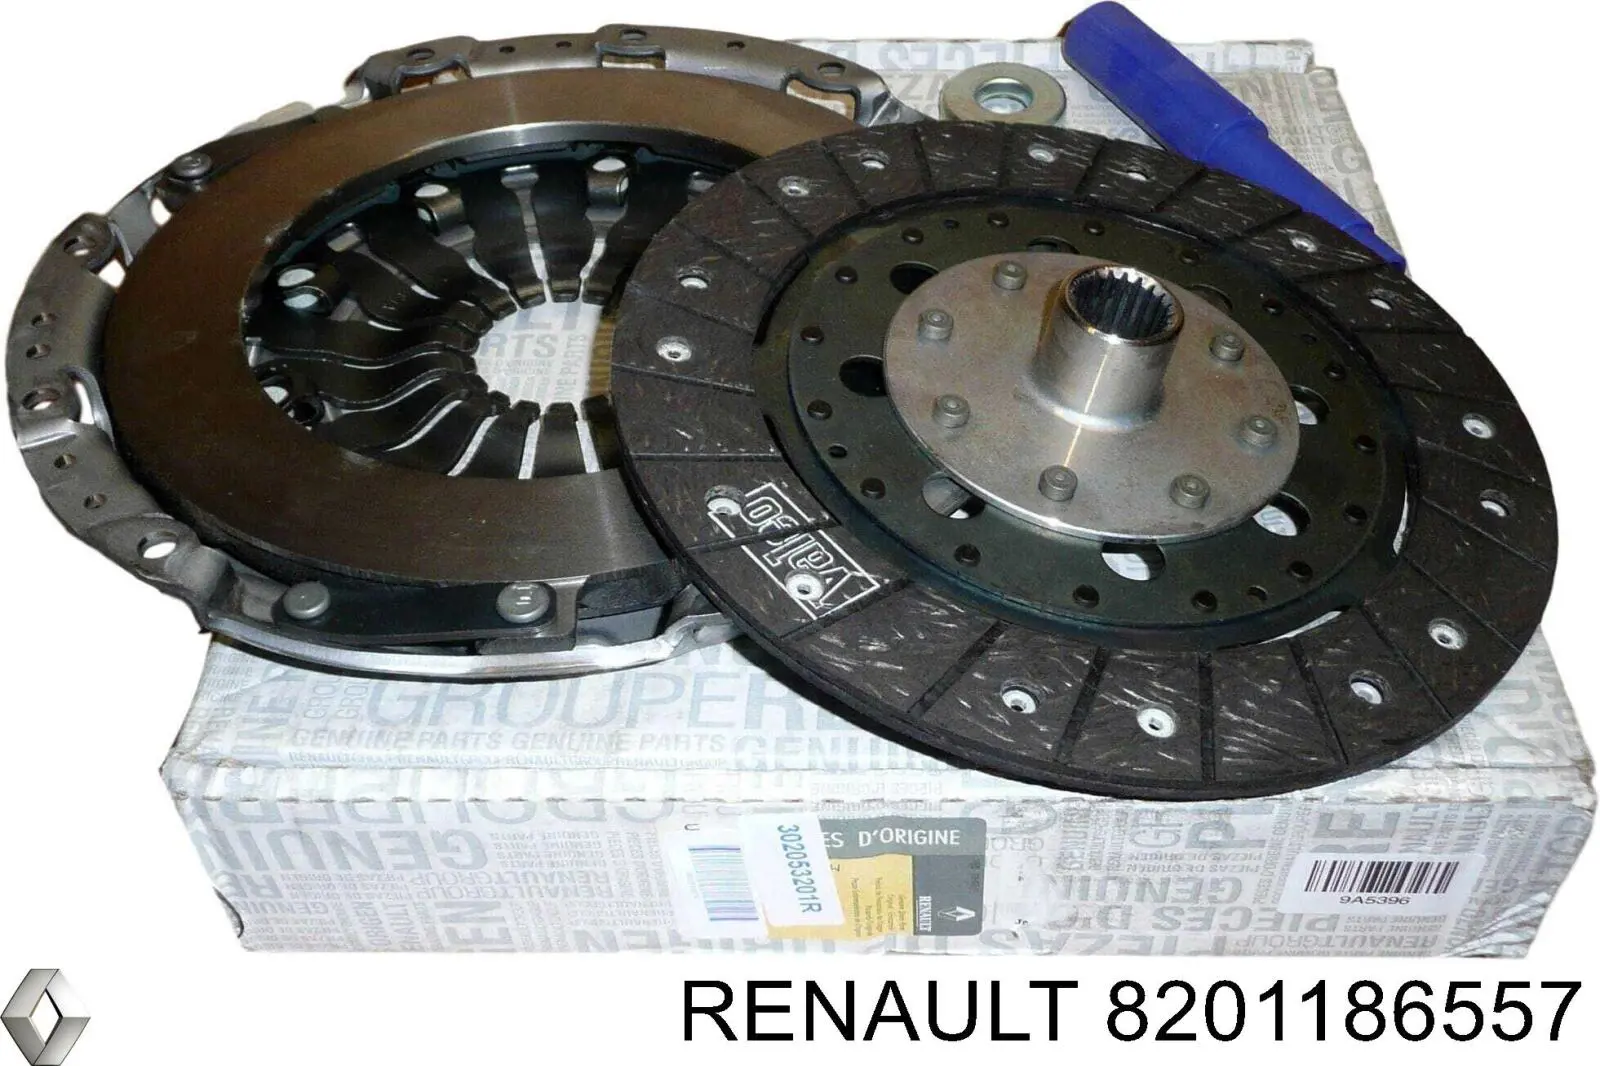 8201186557 Renault (RVI) kit de embraiagem (3 peças)